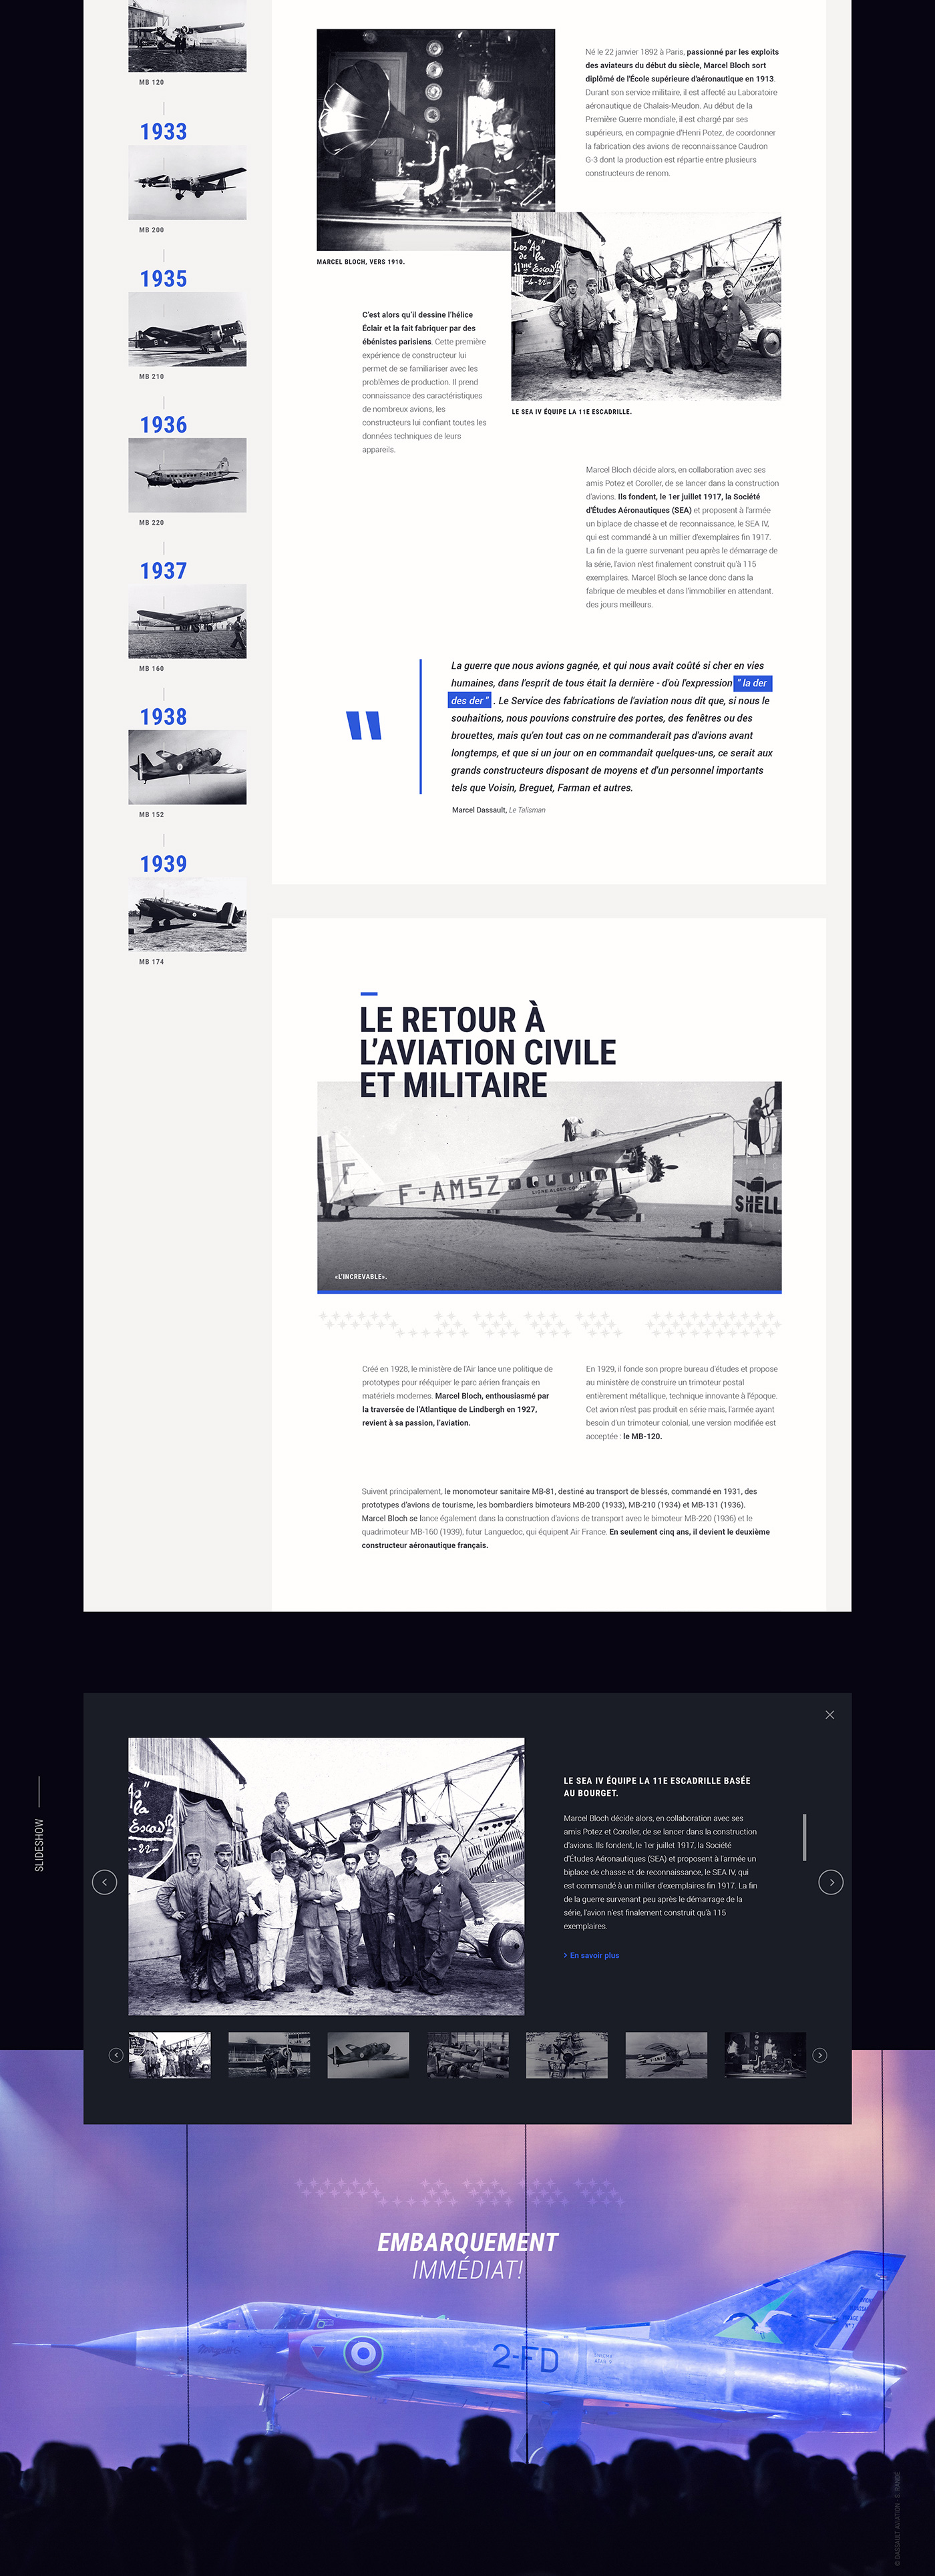 The dassault adventure Aeronautic aviation planes Air Forces history timeline videos branding  Website